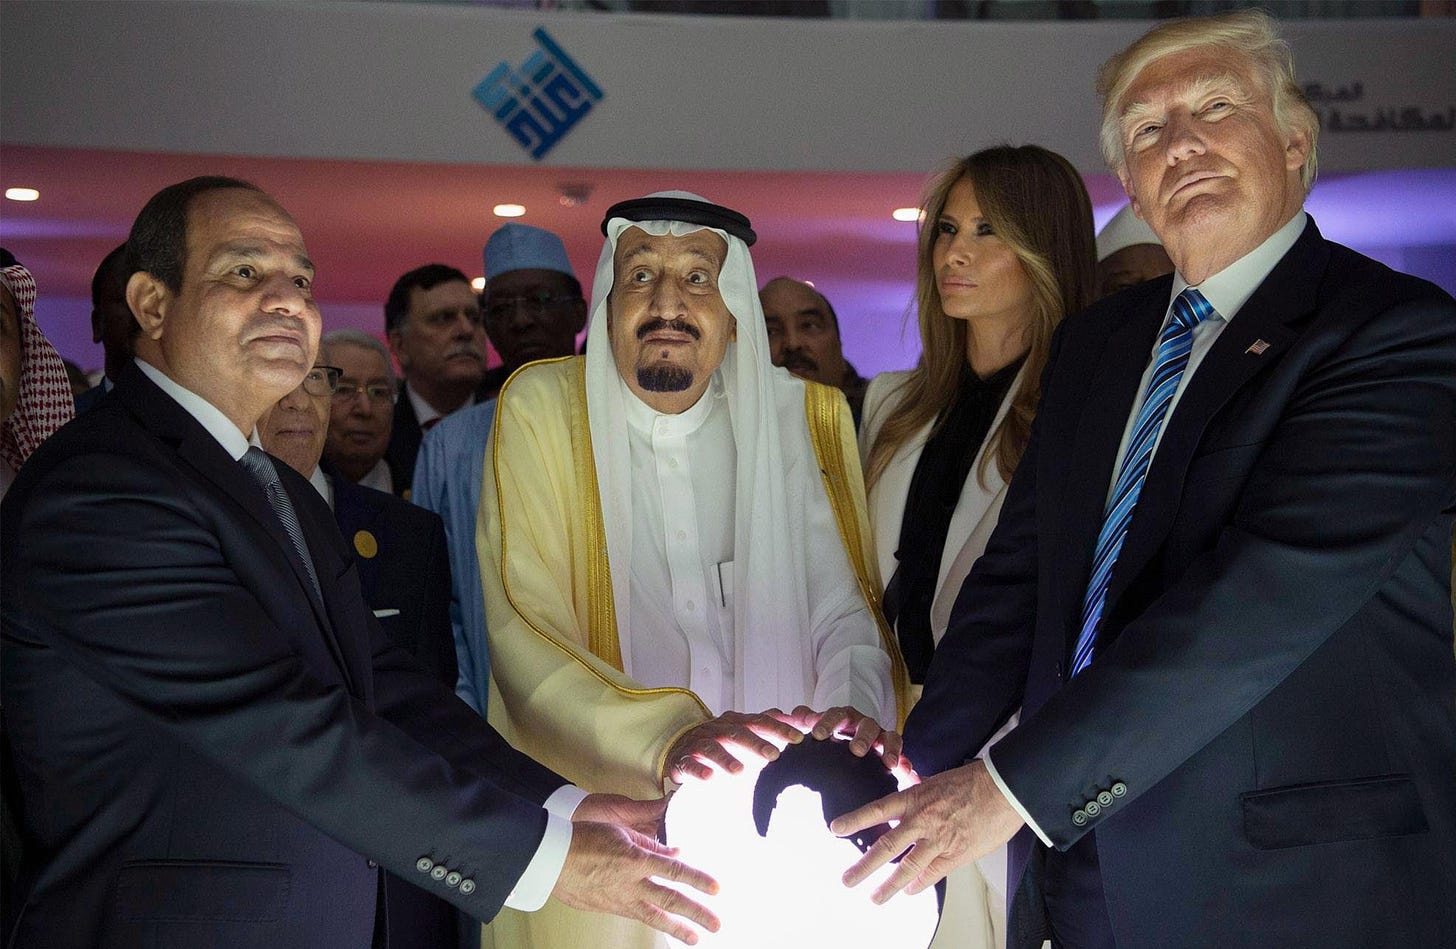 Трамп угрожает санкциями Саудовской Аравии за убийство журналиста  Washington Post | Rubic.us